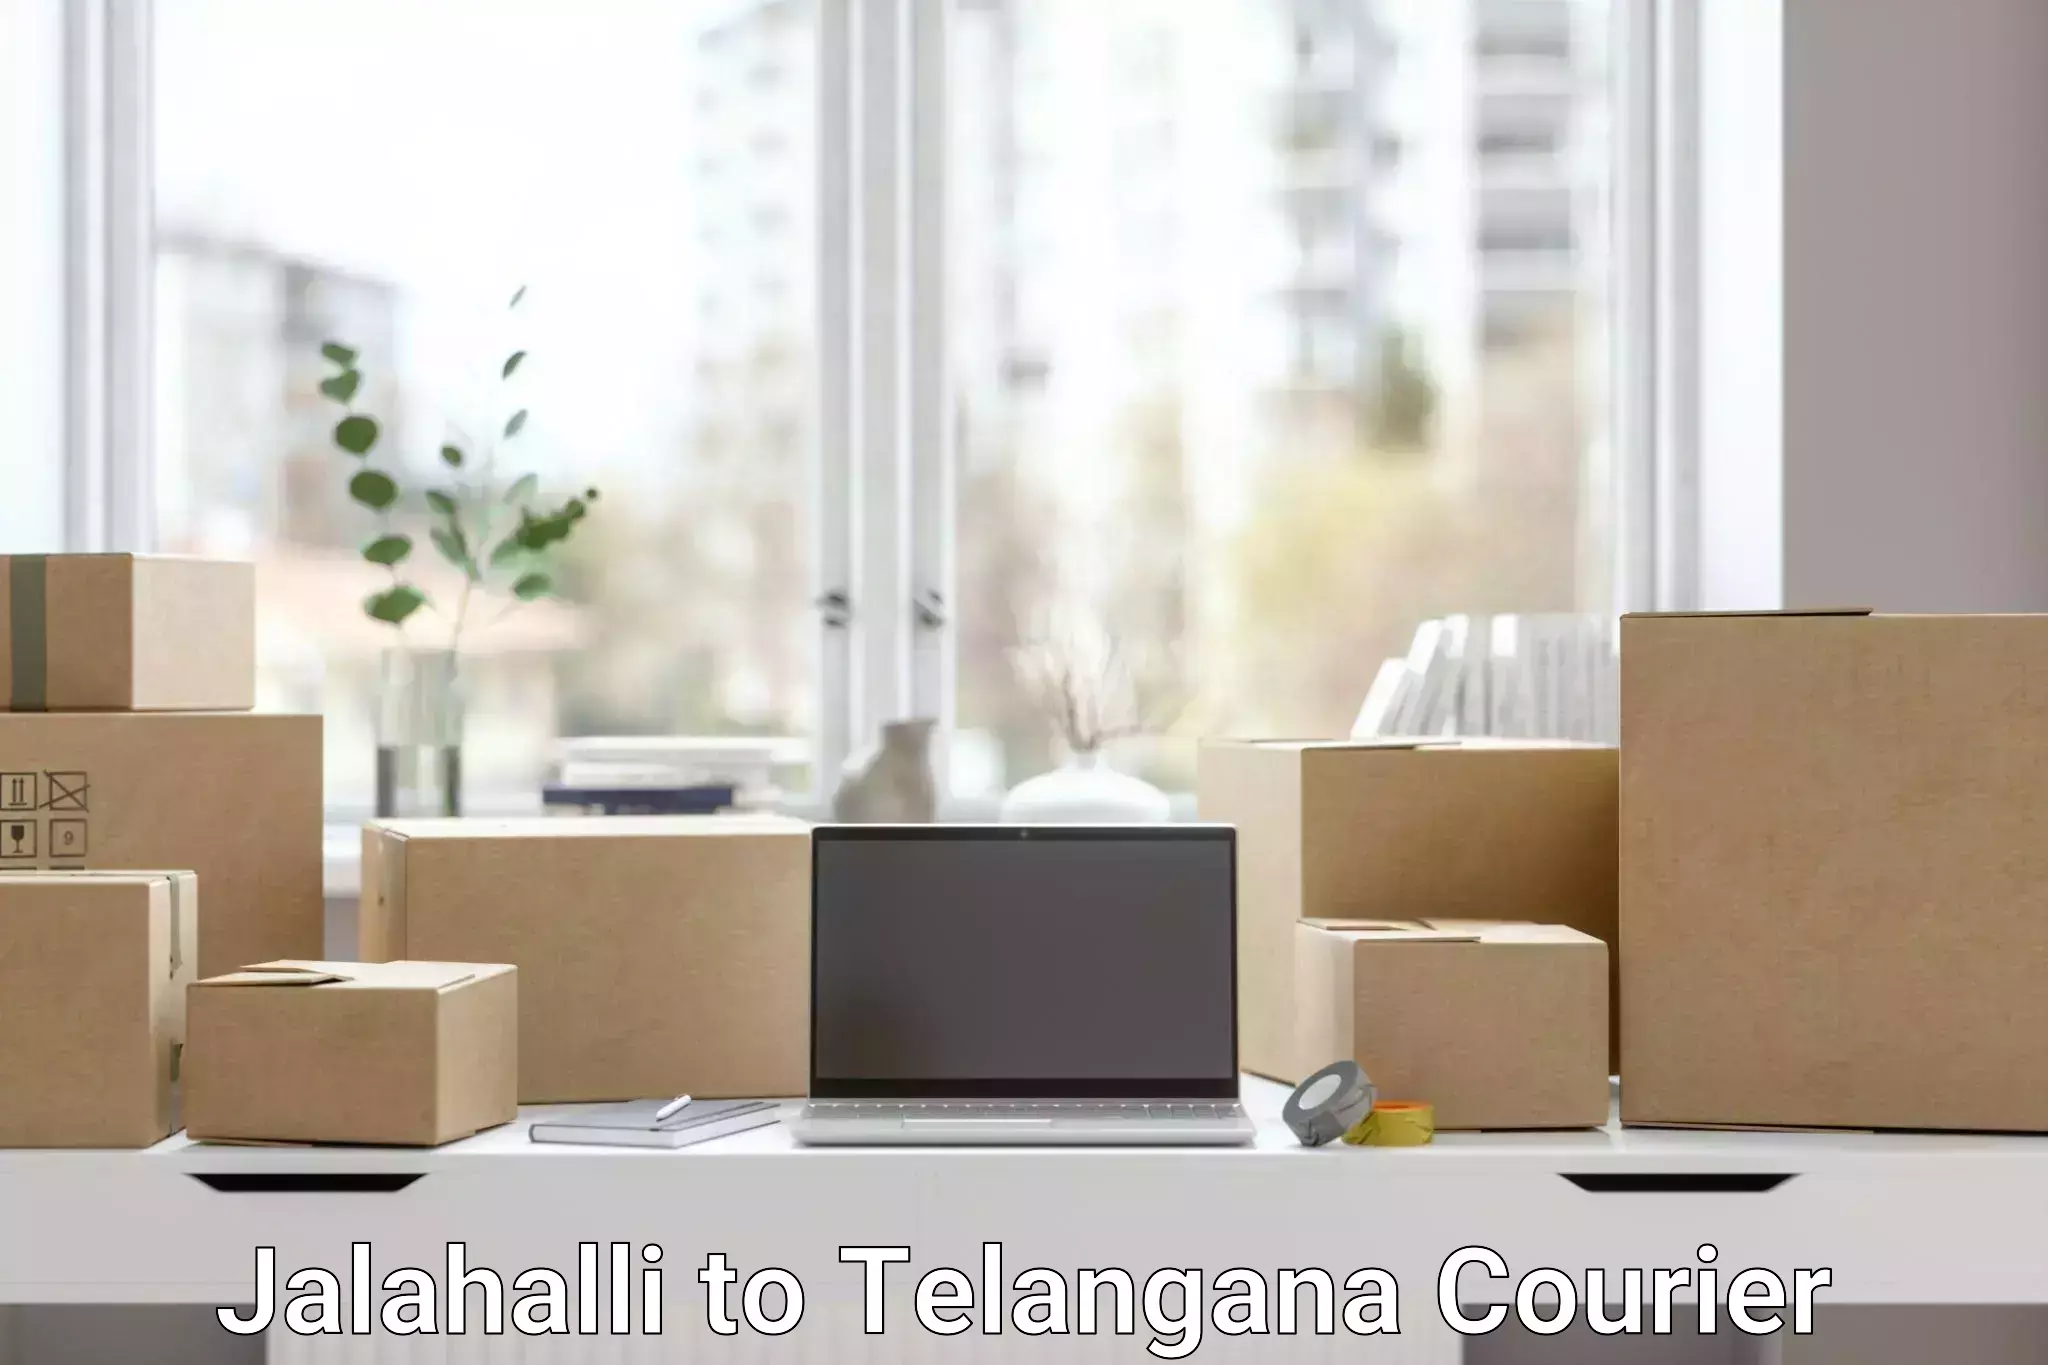 International parcel service Jalahalli to Allapalli